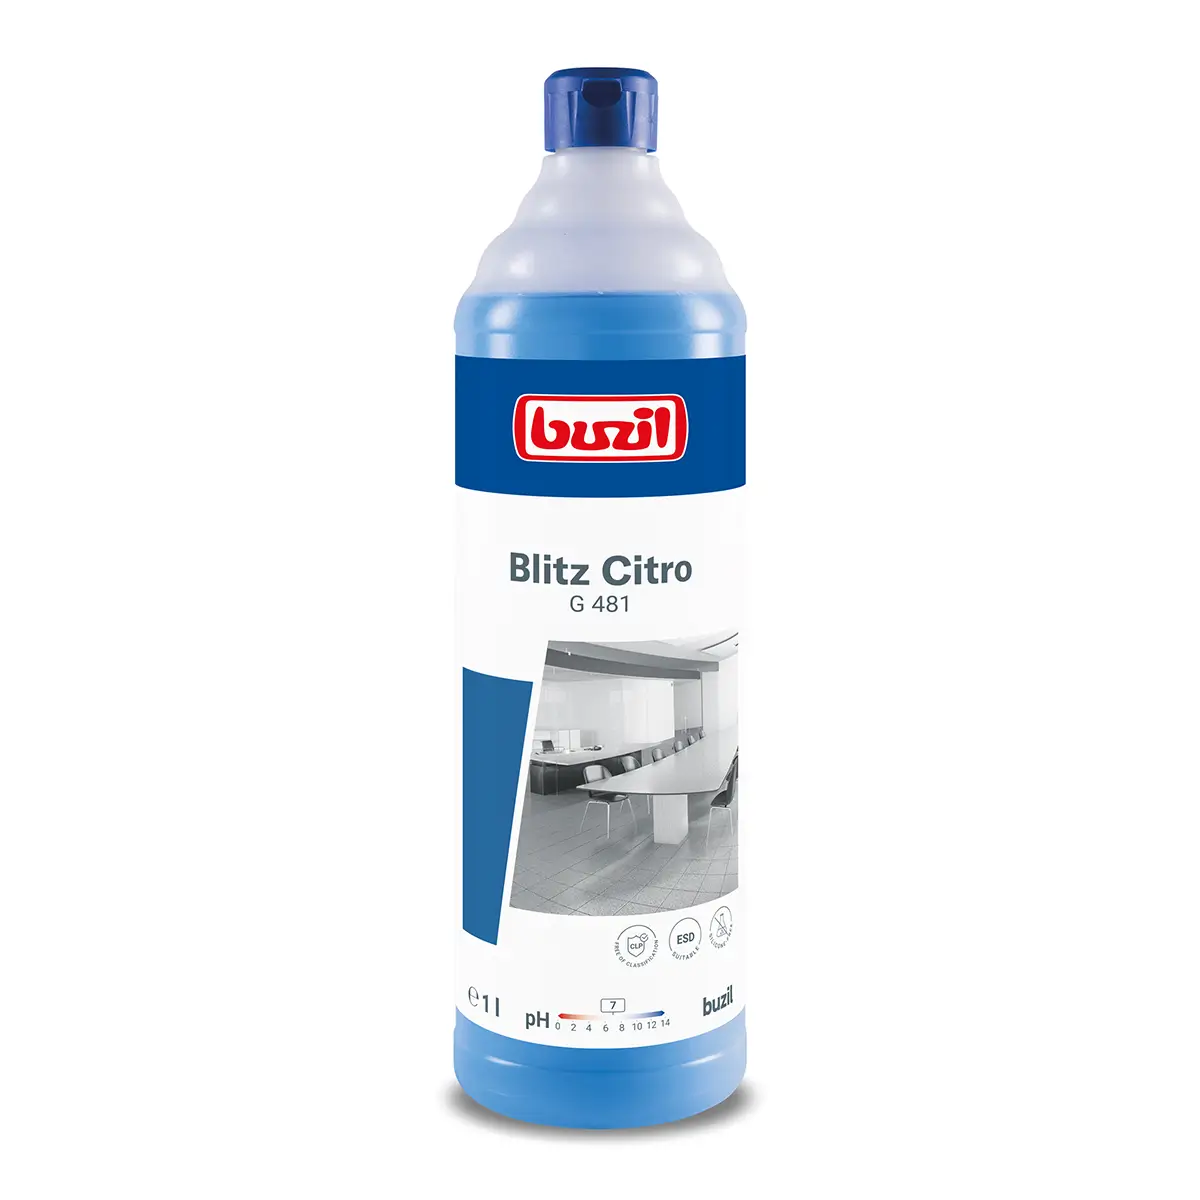 Buzil Blitz Citro G481 1l Reinigungsmittel